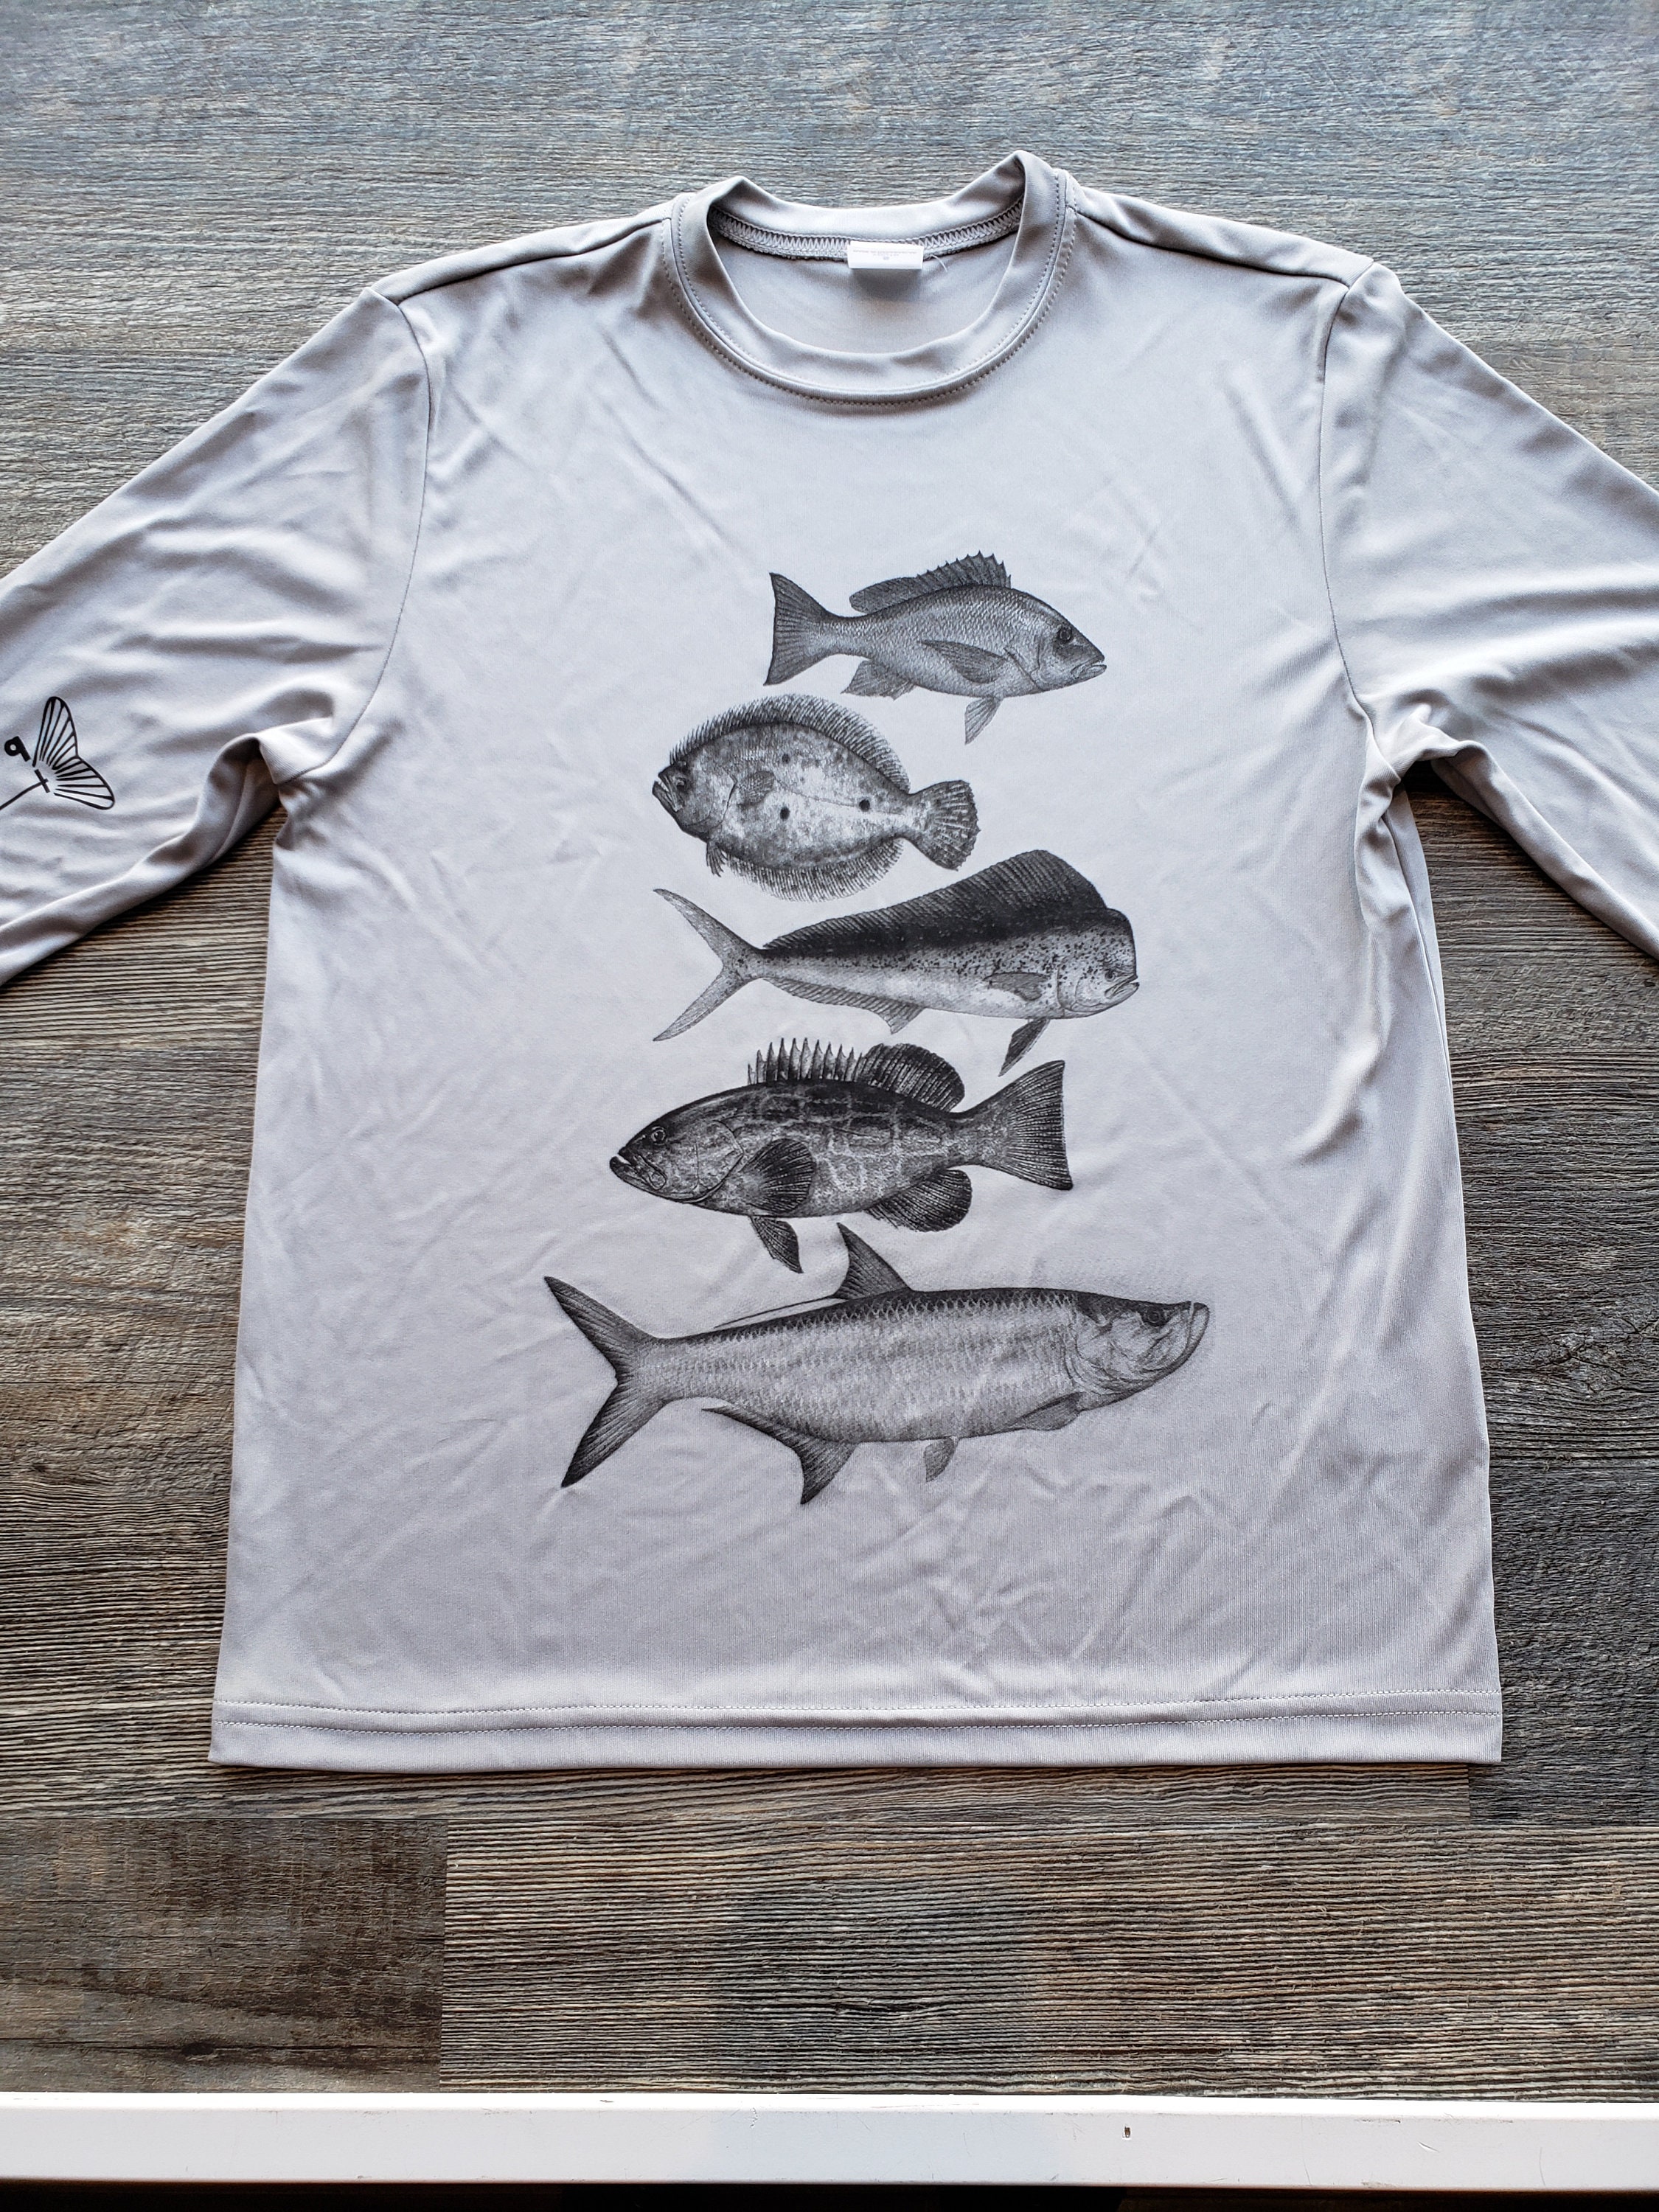 Ocean Fish Shirt saltwater Fishing With Ruler to Measure Fish-unisex 